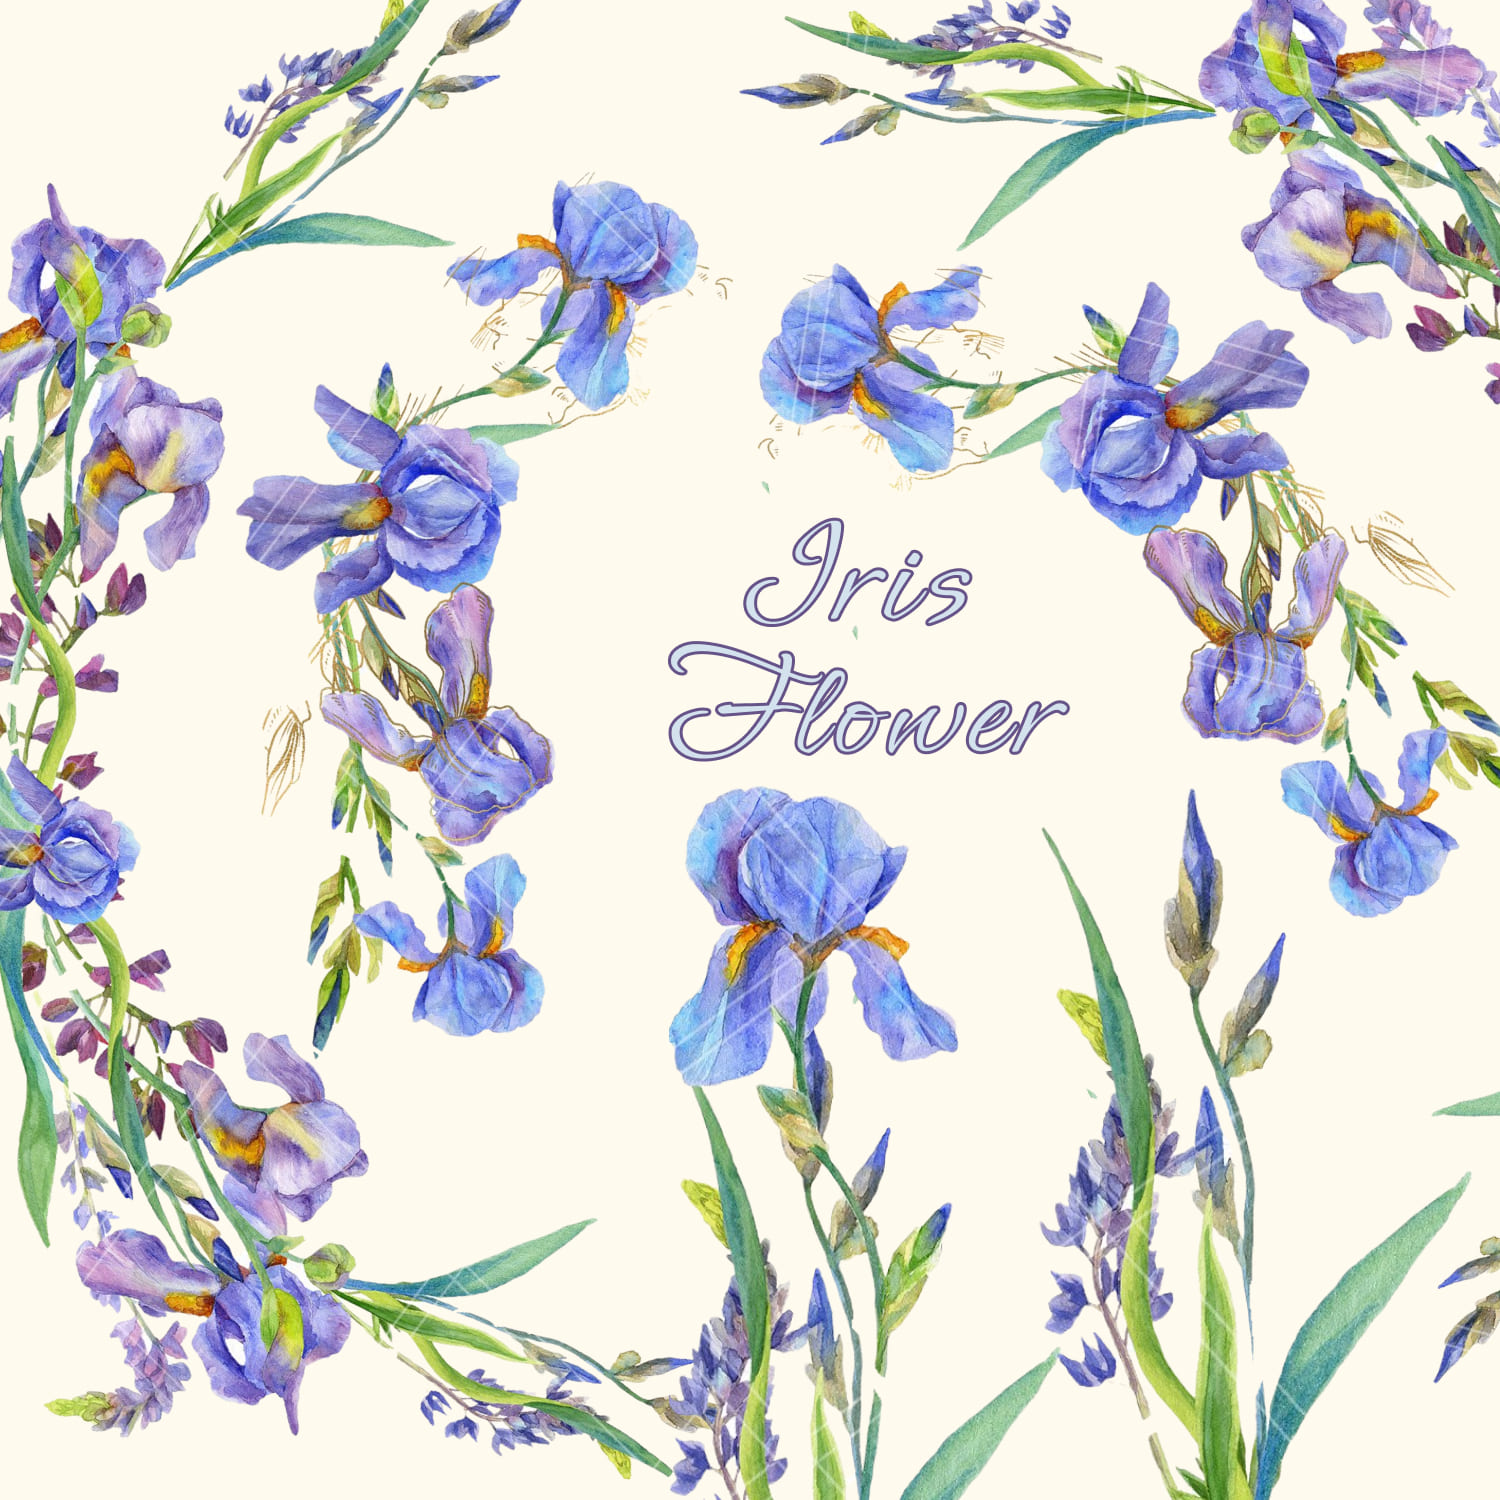 Iris Flower Watercolor Pack cover image.